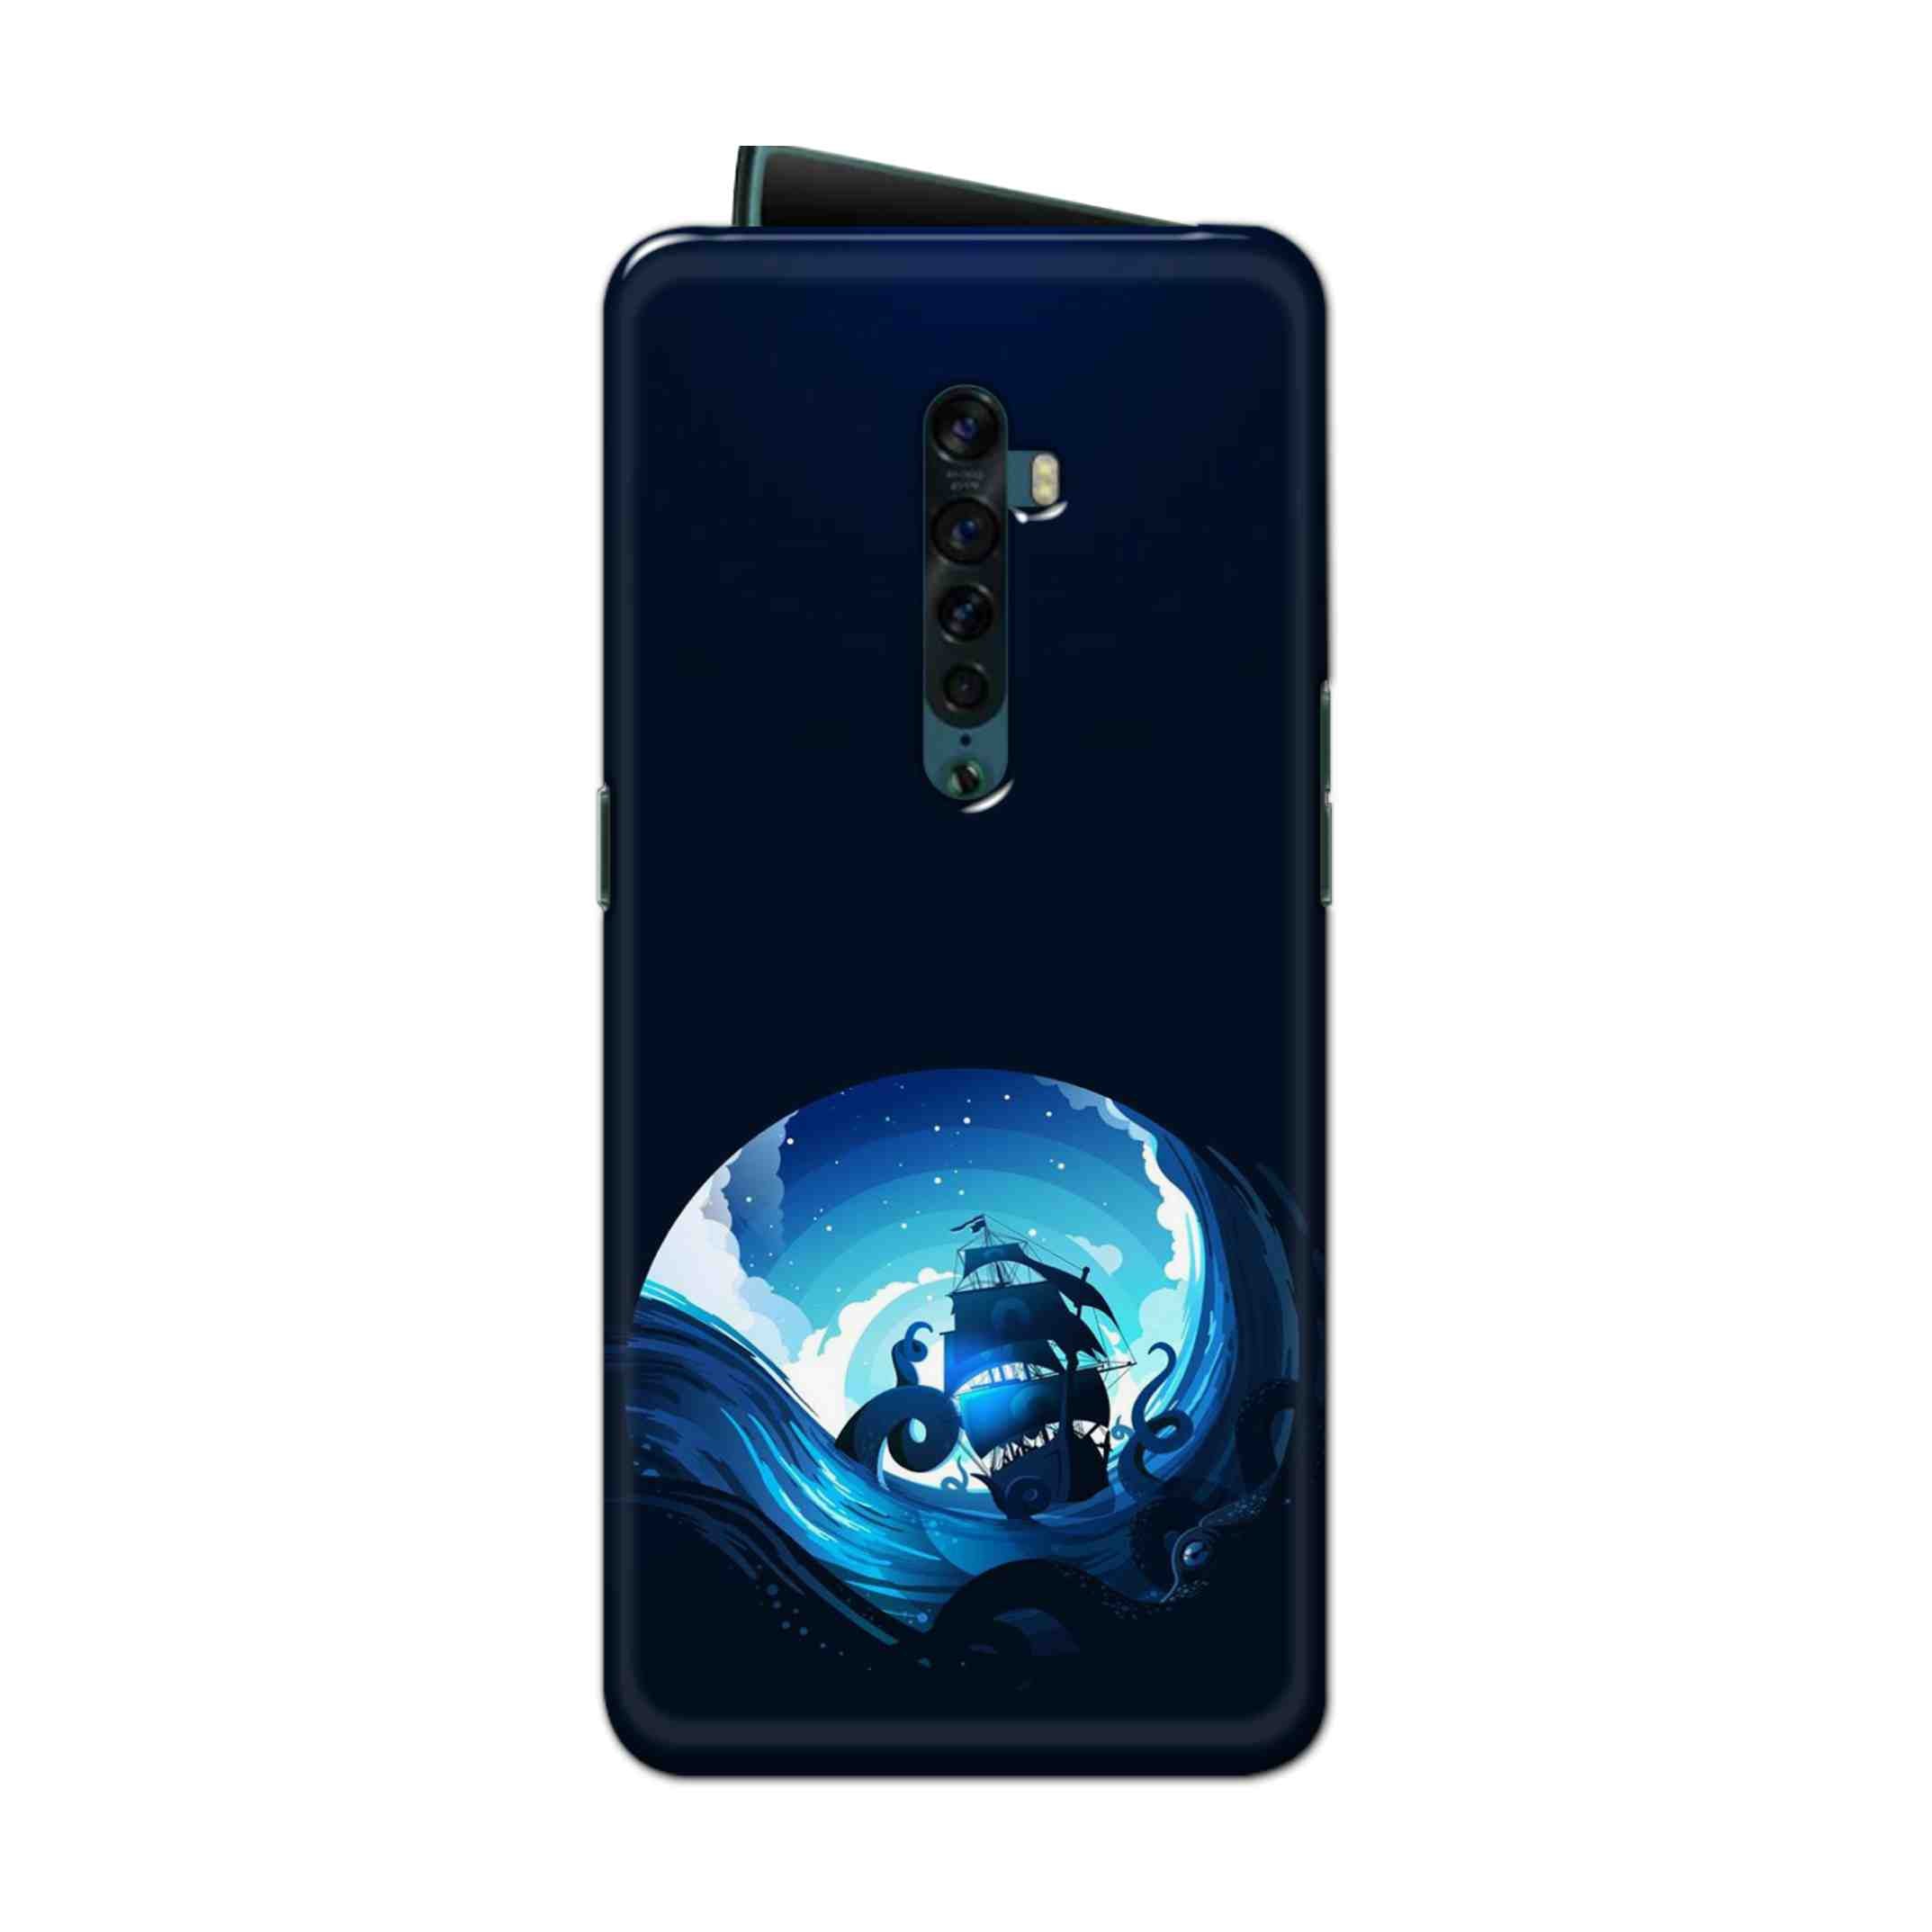 Buy Blue Sea Ship Hard Back Mobile Phone Case Cover For Oppo Reno 2 Online